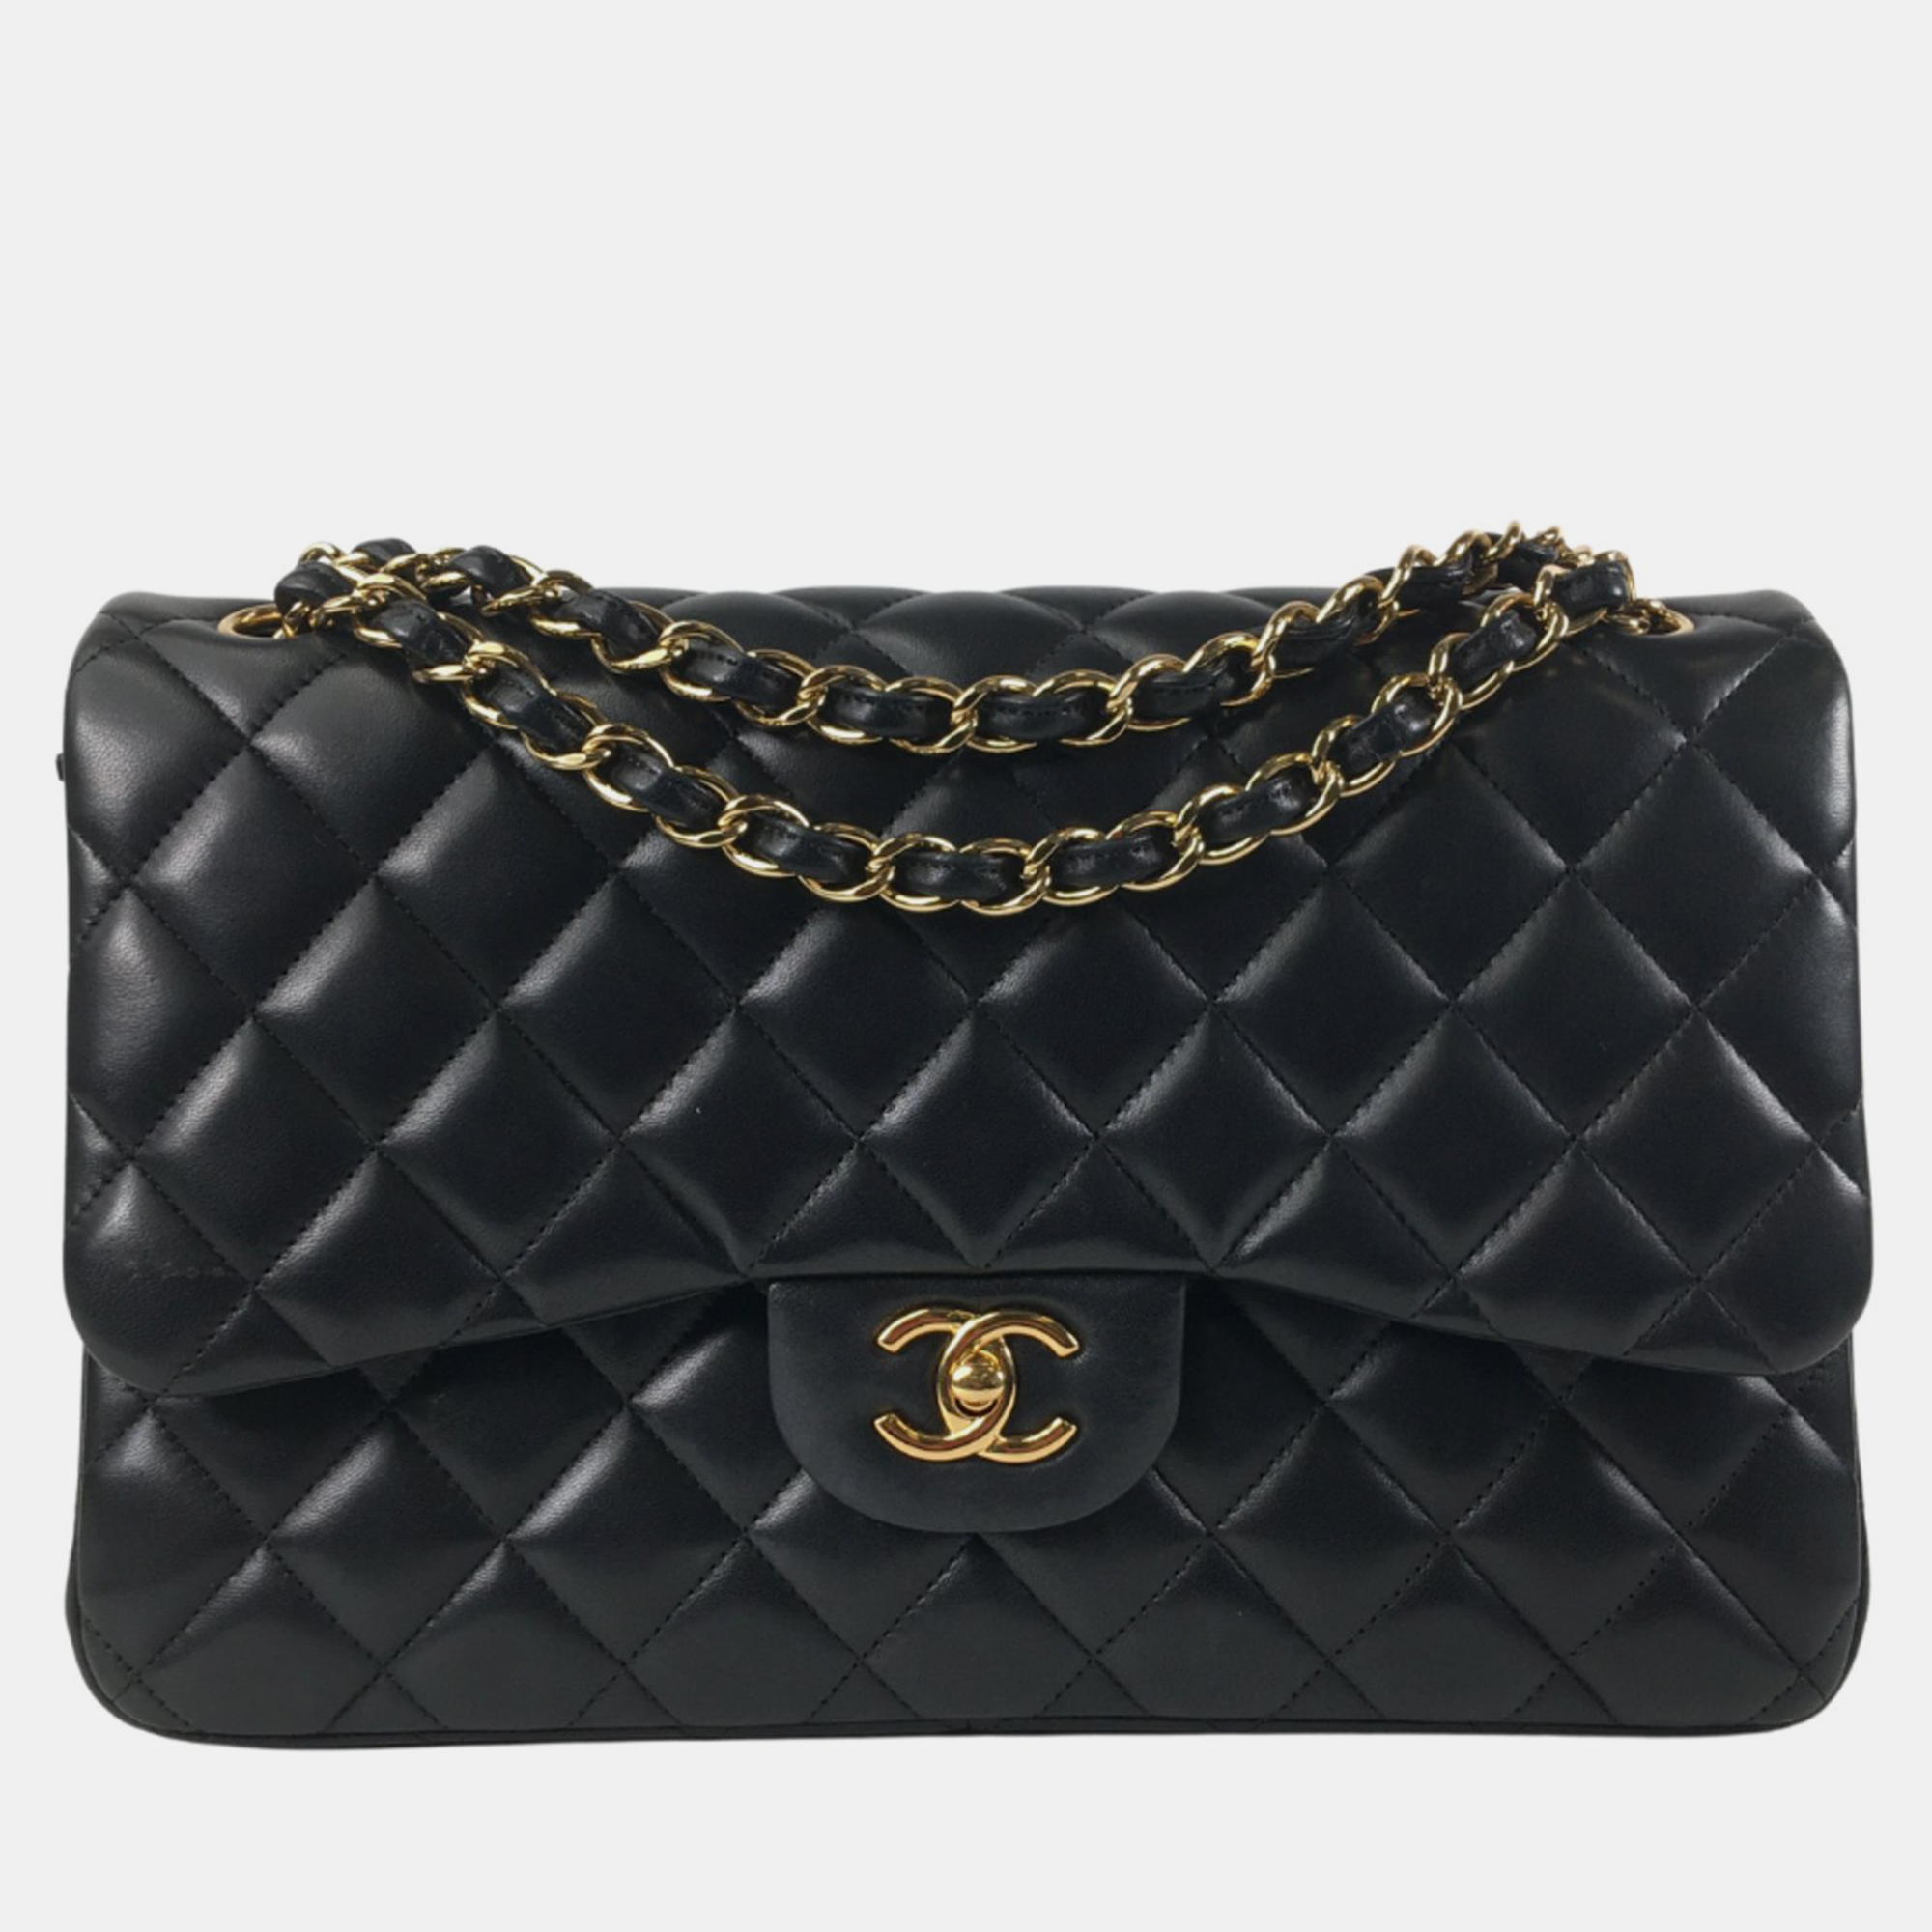 Chanel black leather jumbo classic double flap shoulder bags